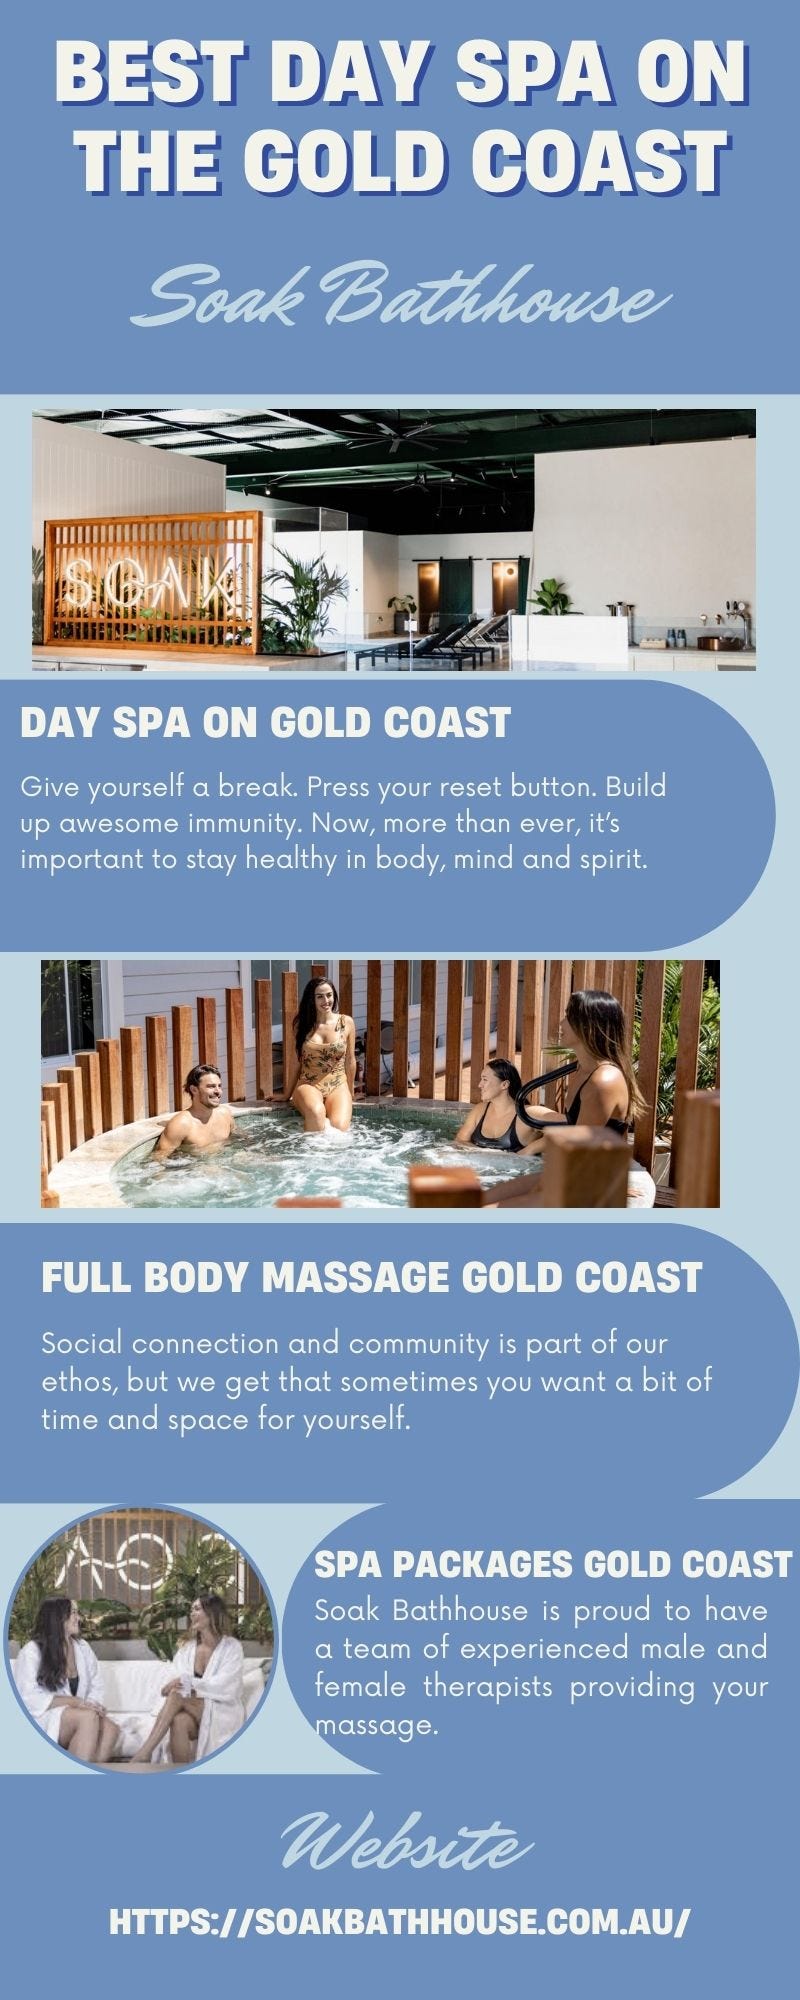 Best Day Spa on Gold Coast - Soakbath house - Medium